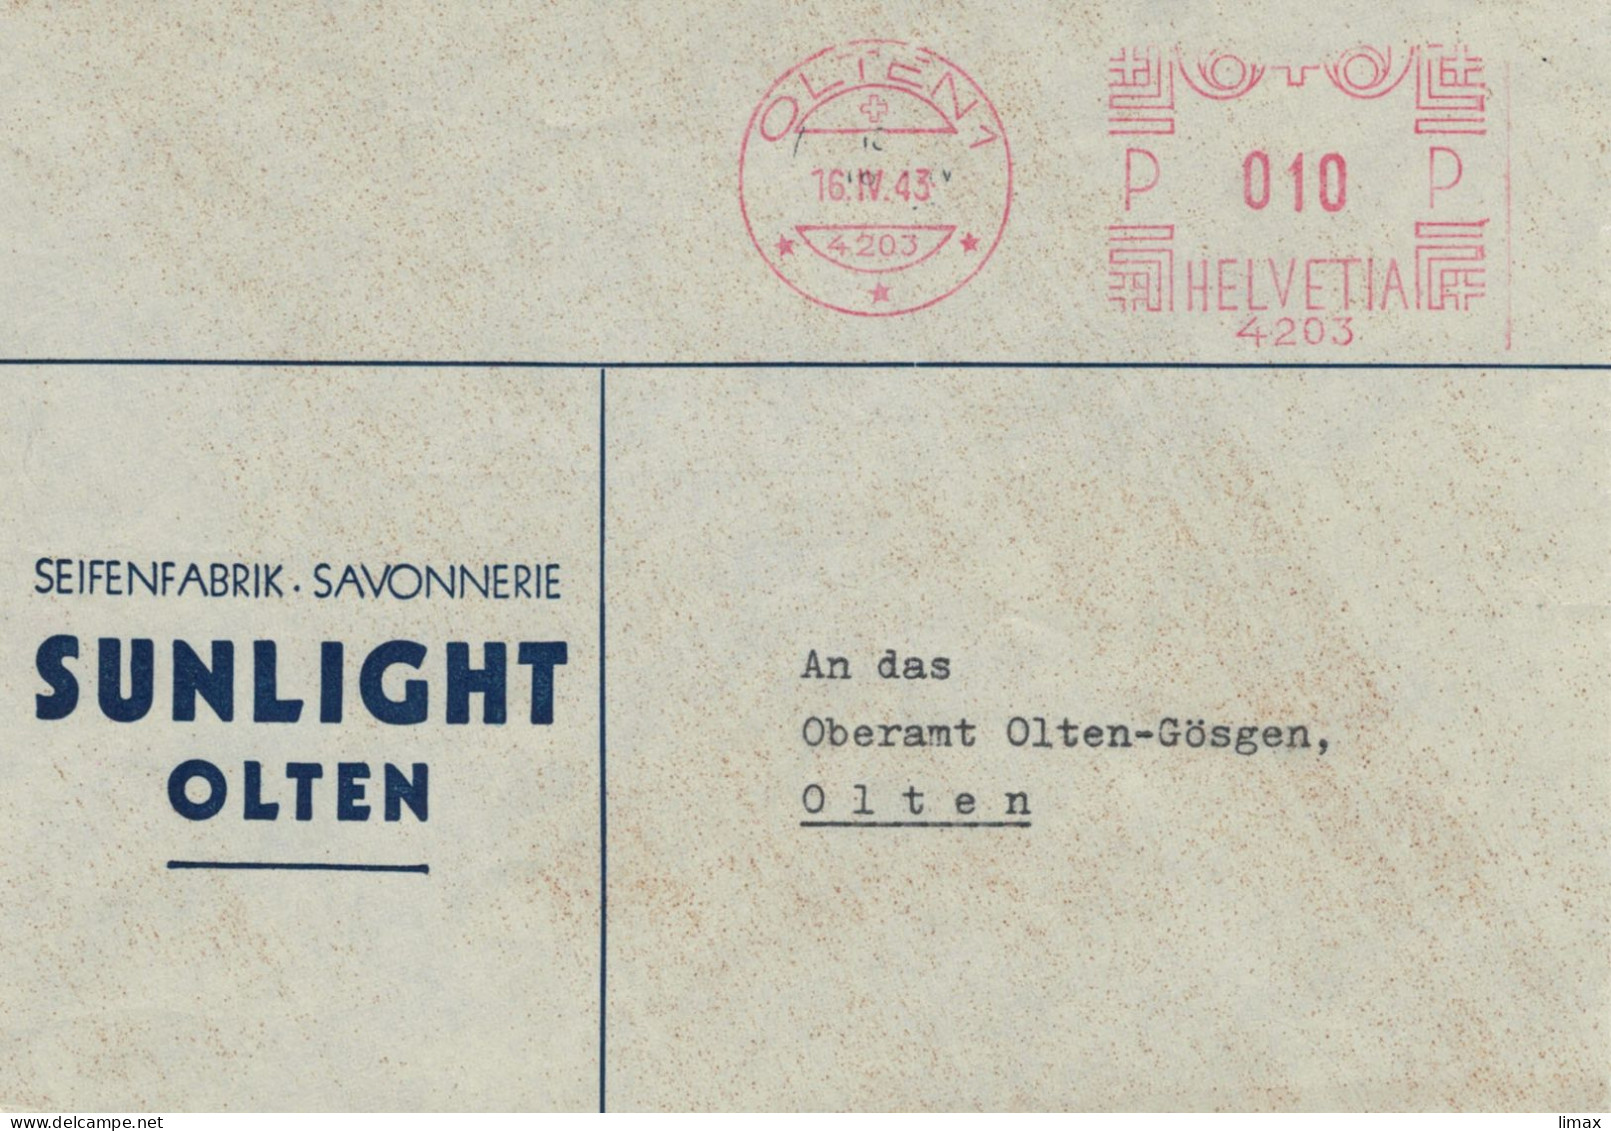 Seifenfabrik Savonnerie Sunlight Olten 1943 No. 4203 - Ortsbrief - Affranchissements Mécaniques